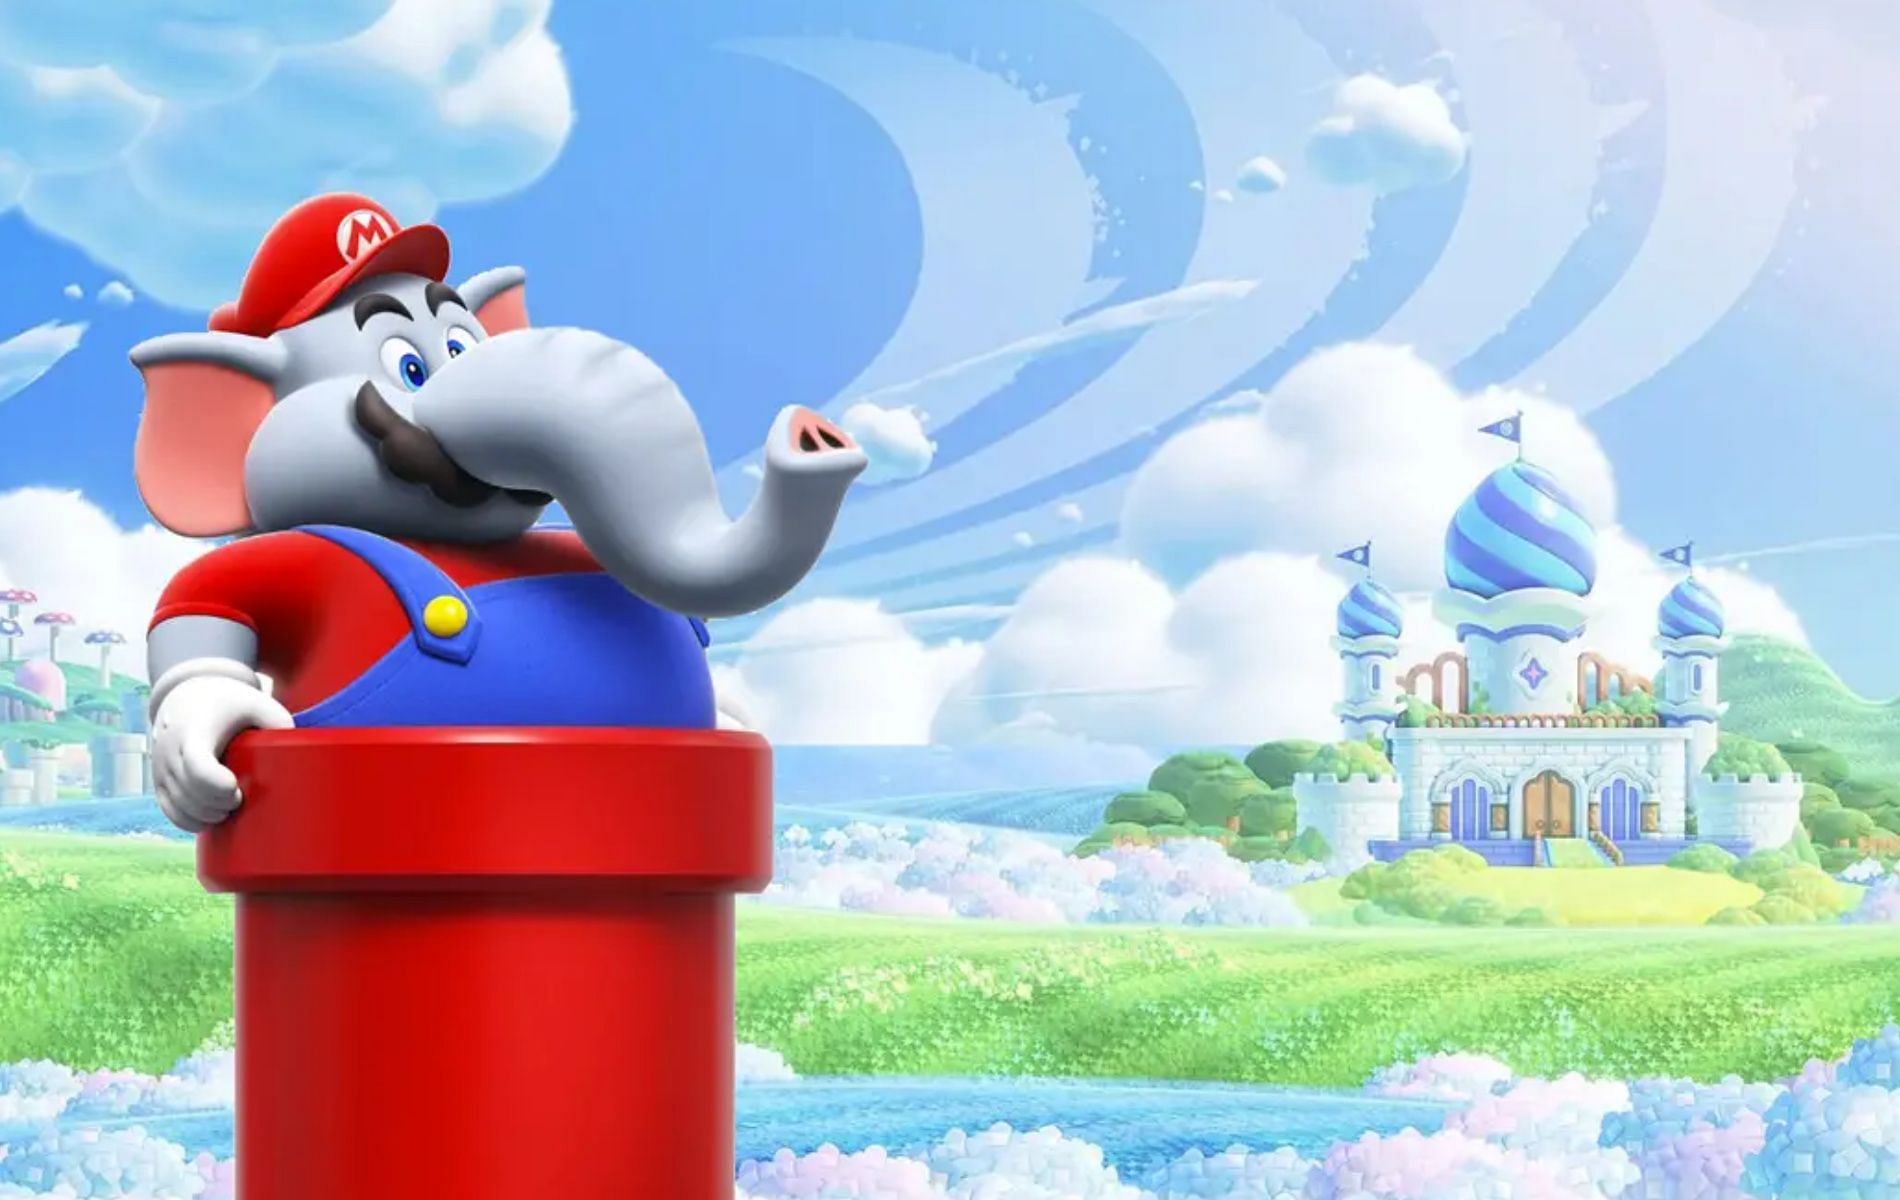 Official promotional artwork for Super Mario Bros Wonder featuring Elephant Mario